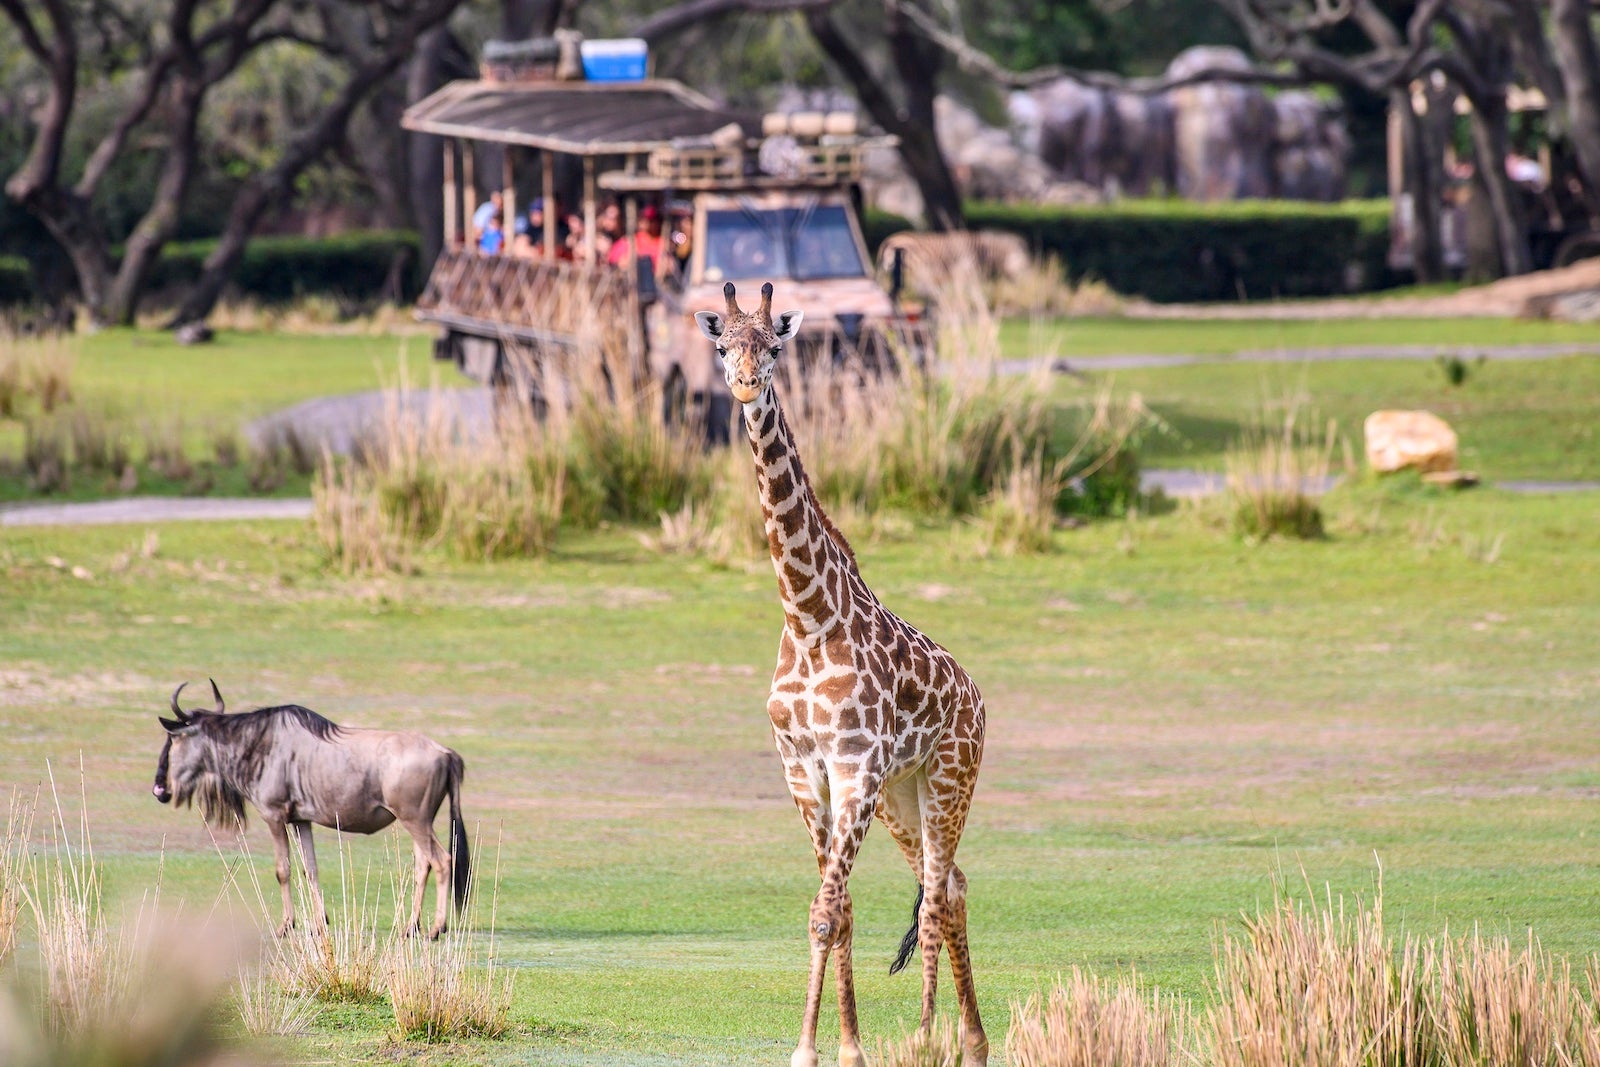 Animal Kingdom's Kilimanjaro Safaris attractions